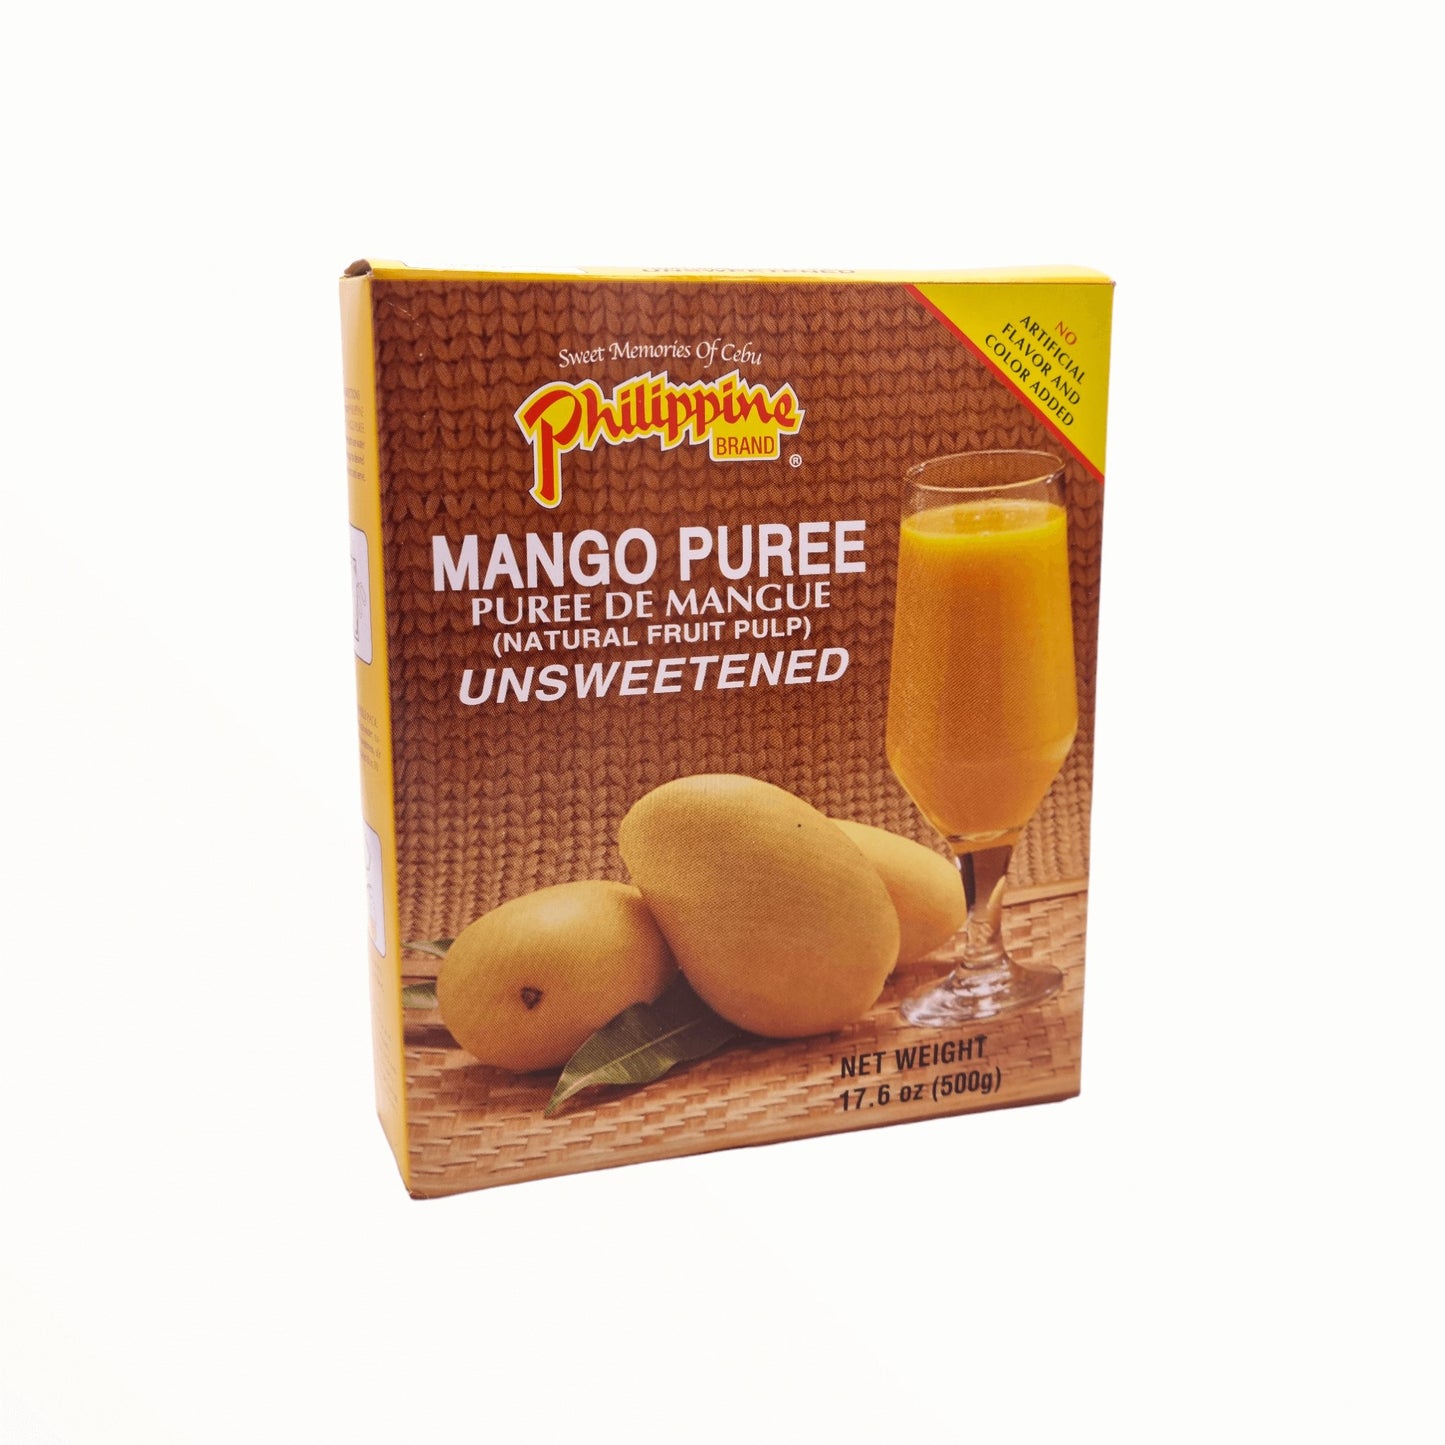 Mango Puree 500g - Mabuhay Pinoy Asia Shop